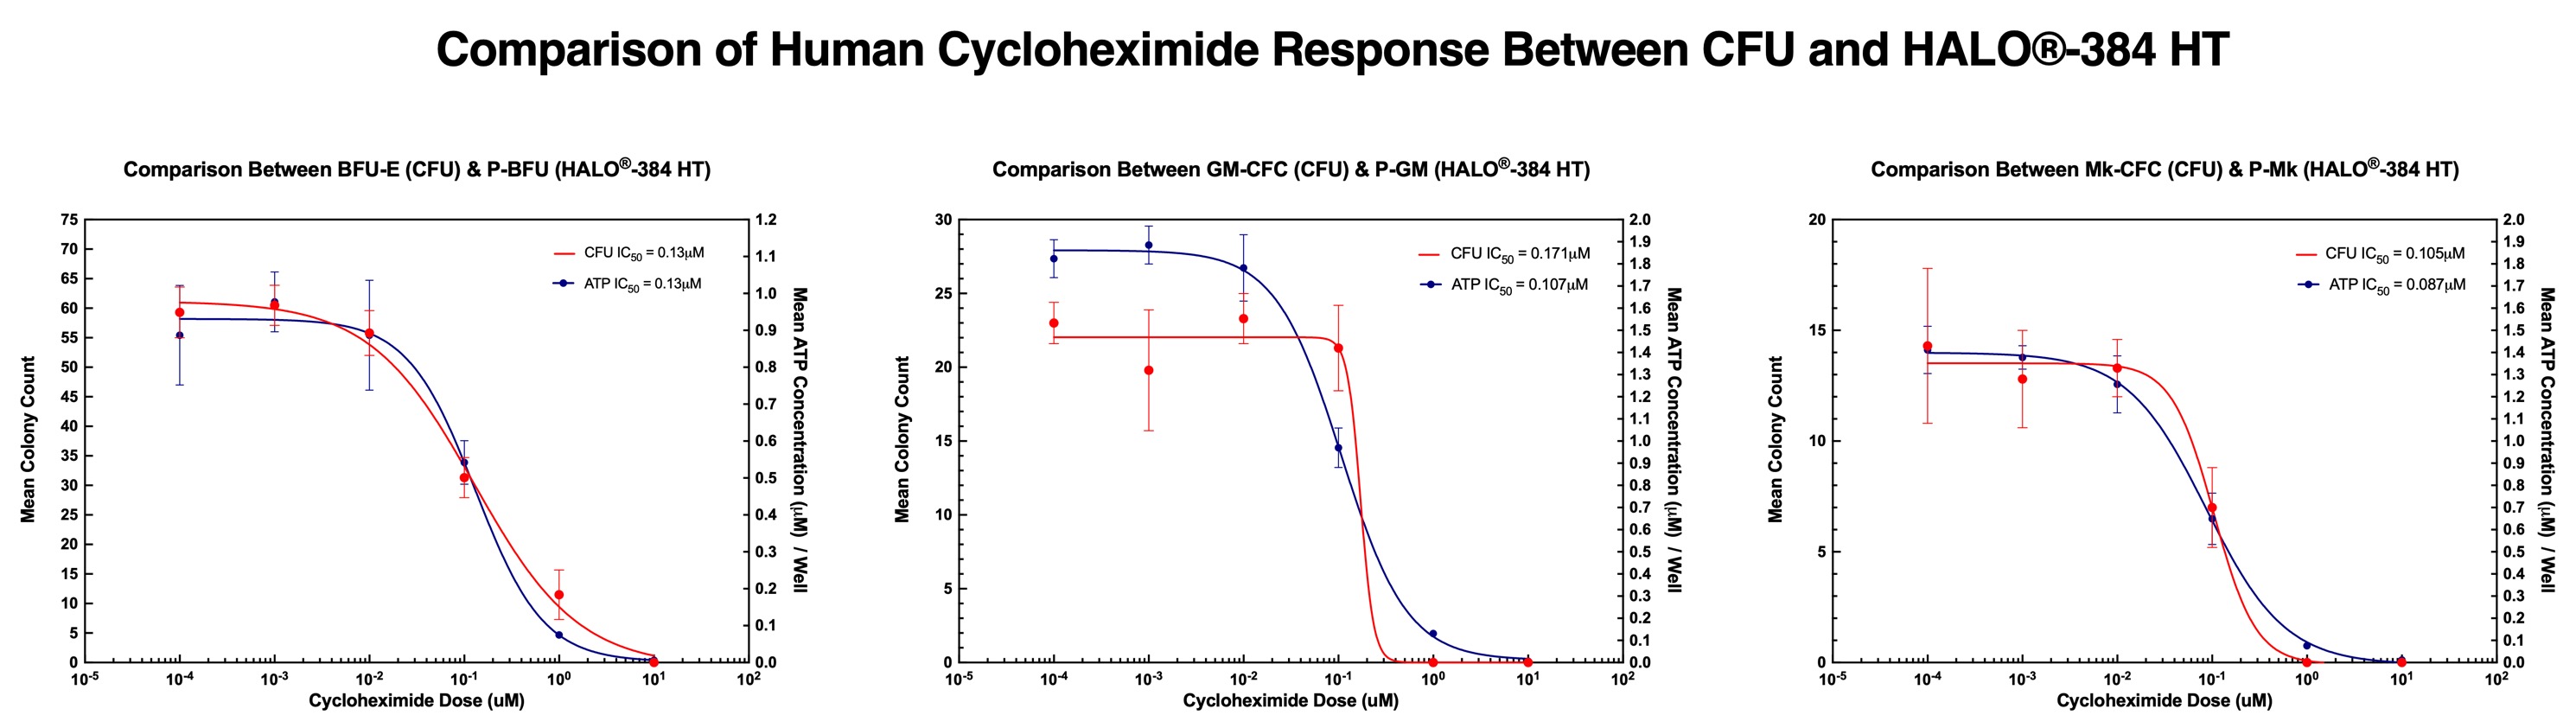 Comparison of CFU and HALO-384 HT Cycloheximide Response for Human Bone Marrow